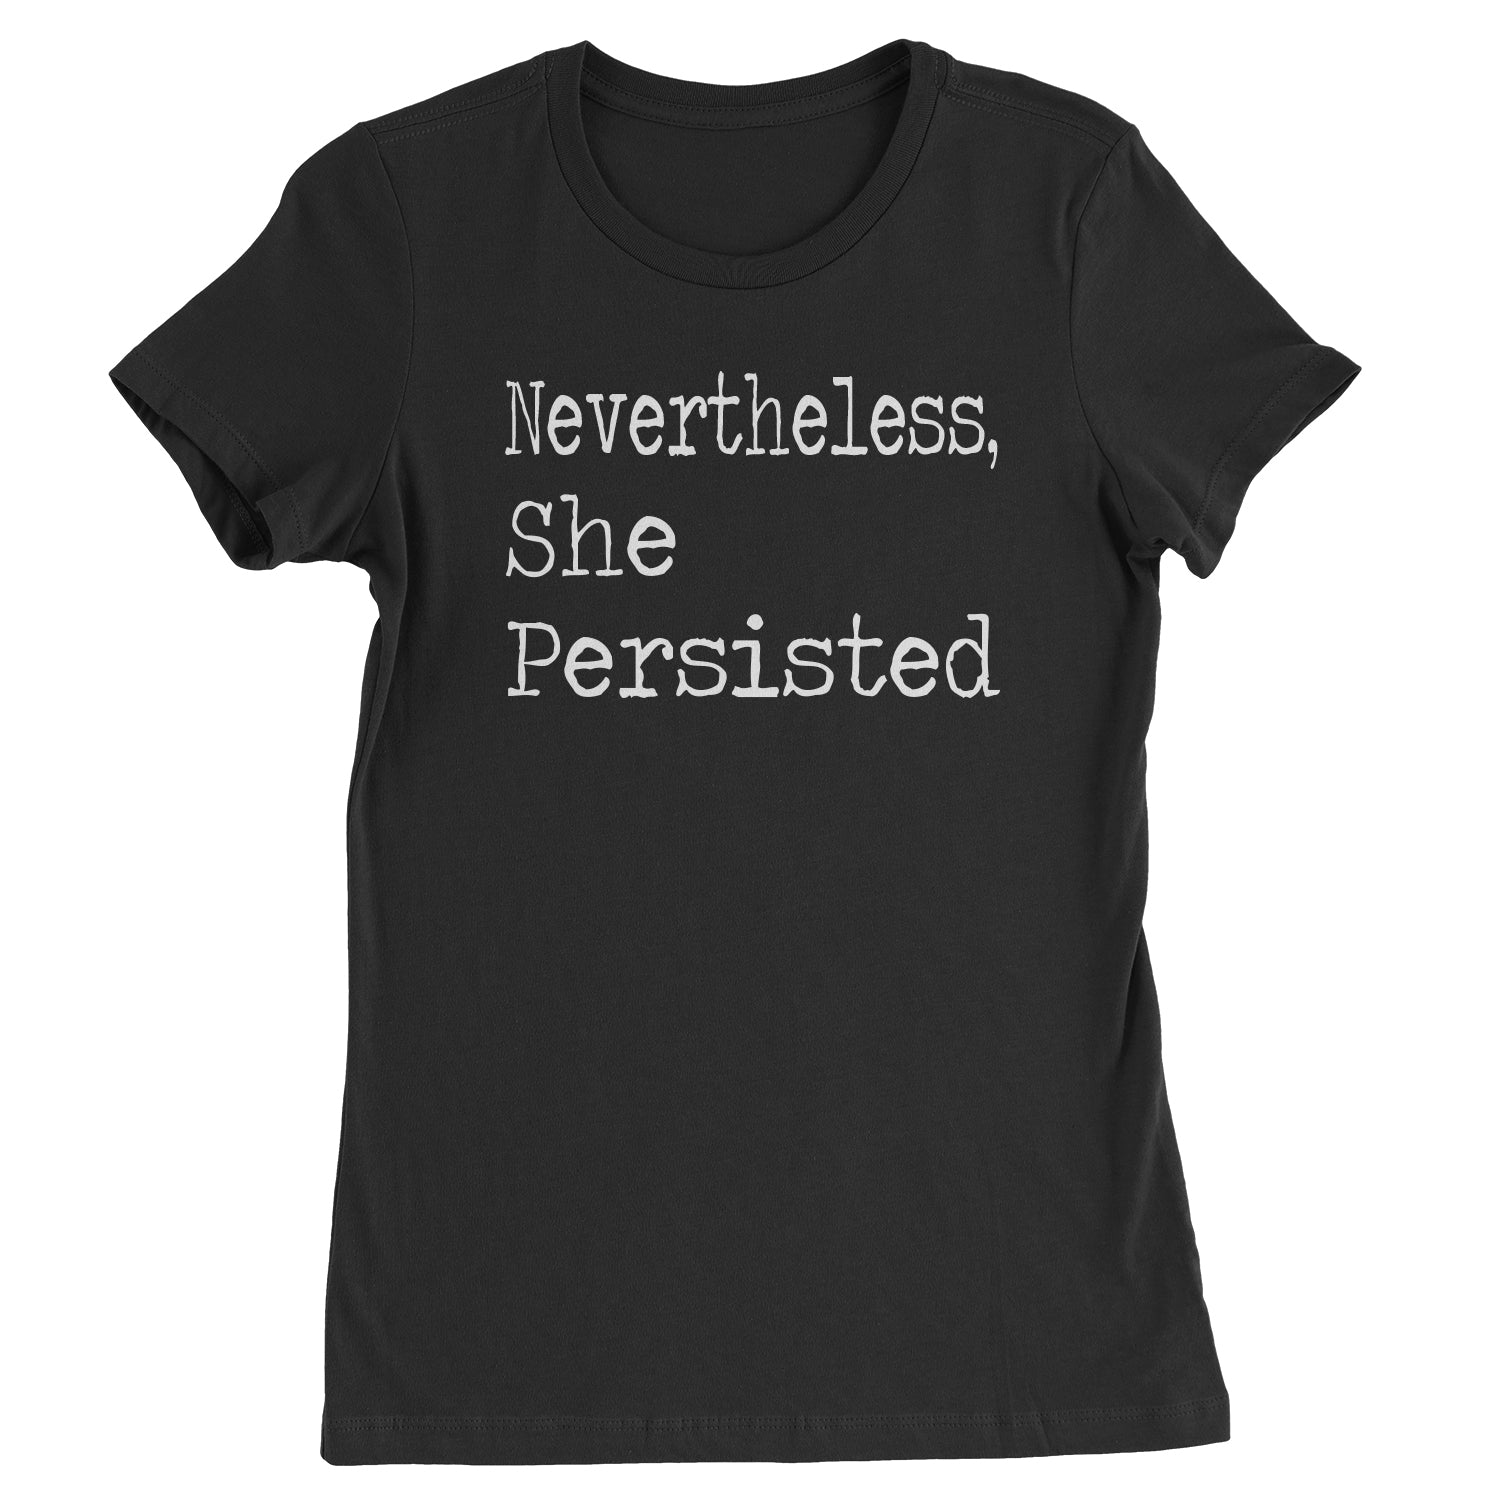 Nevertheless, She Persisted Womens T-shirt 2020, feminism, feminist, kamala, letlizspeak, mamala, mcconnell, mitch, momala, mommala by Expression Tees